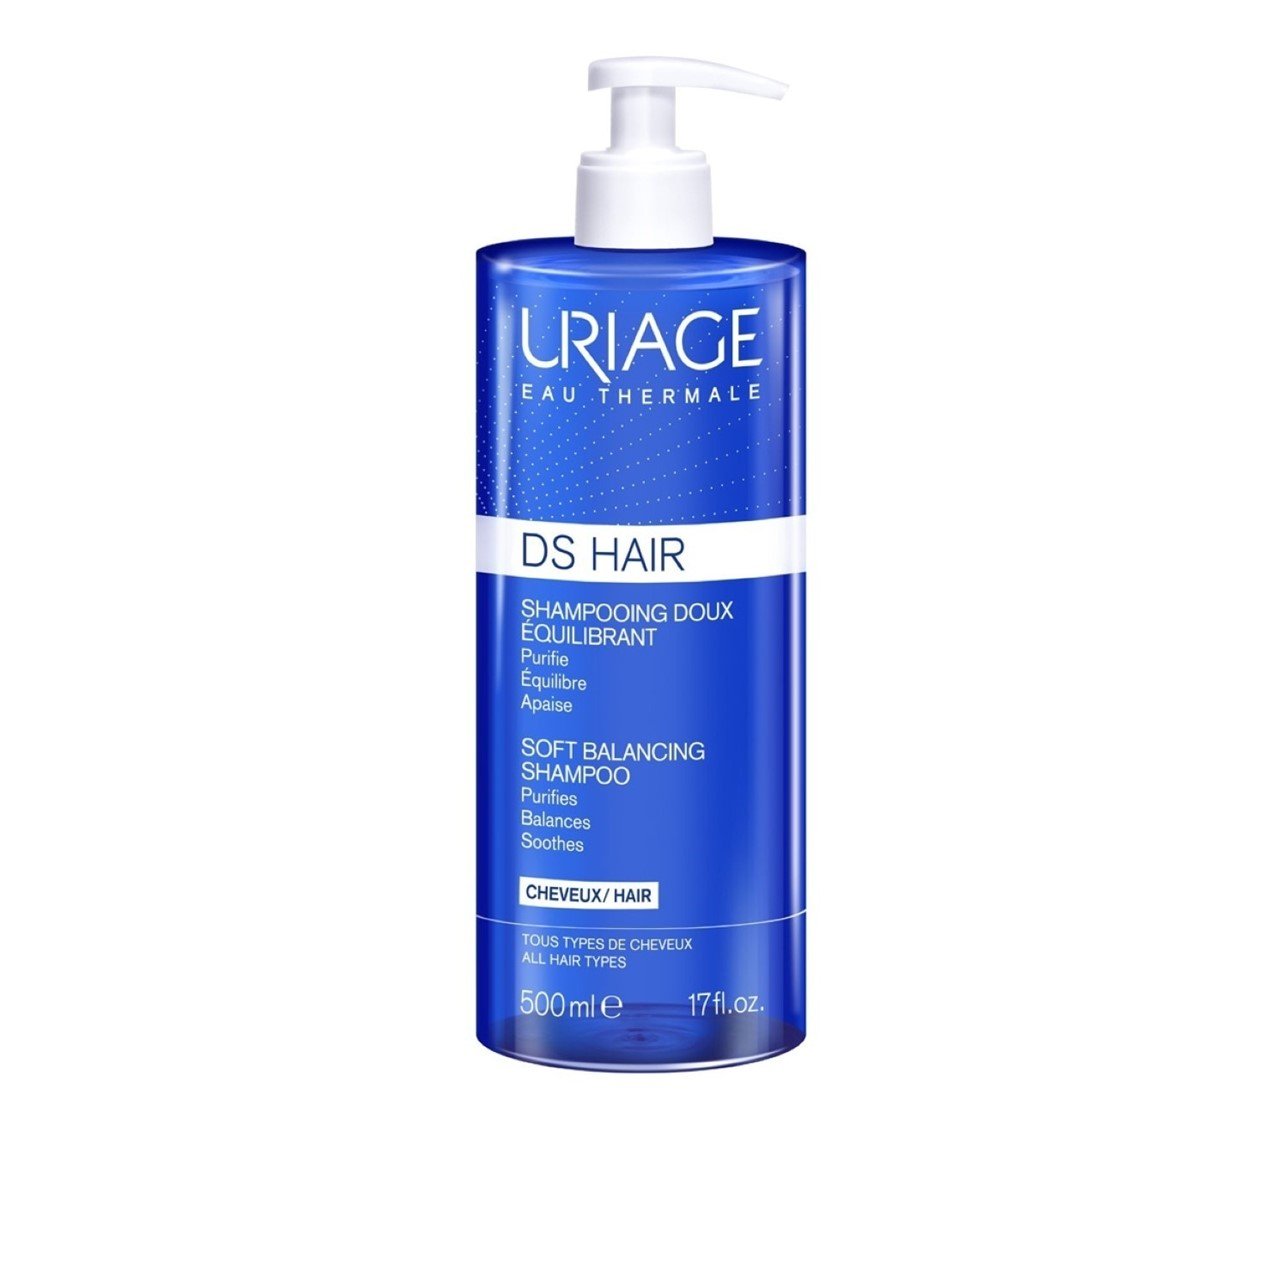 Uriage D.S. Hair Soft Balancing Shampoo